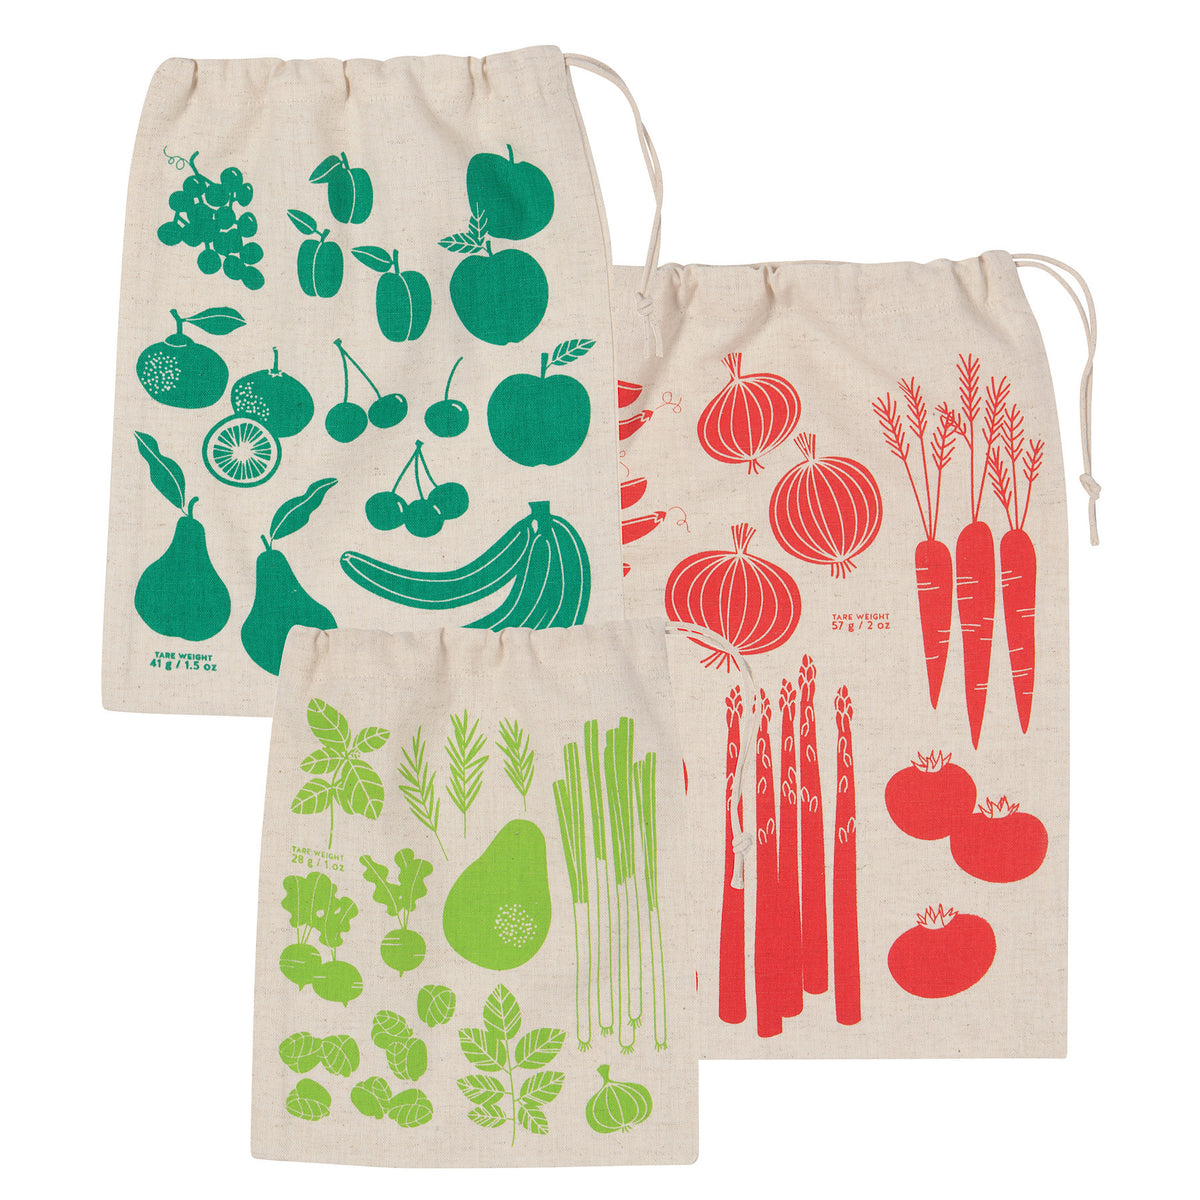 Veggies Produce Bags, Set of 3